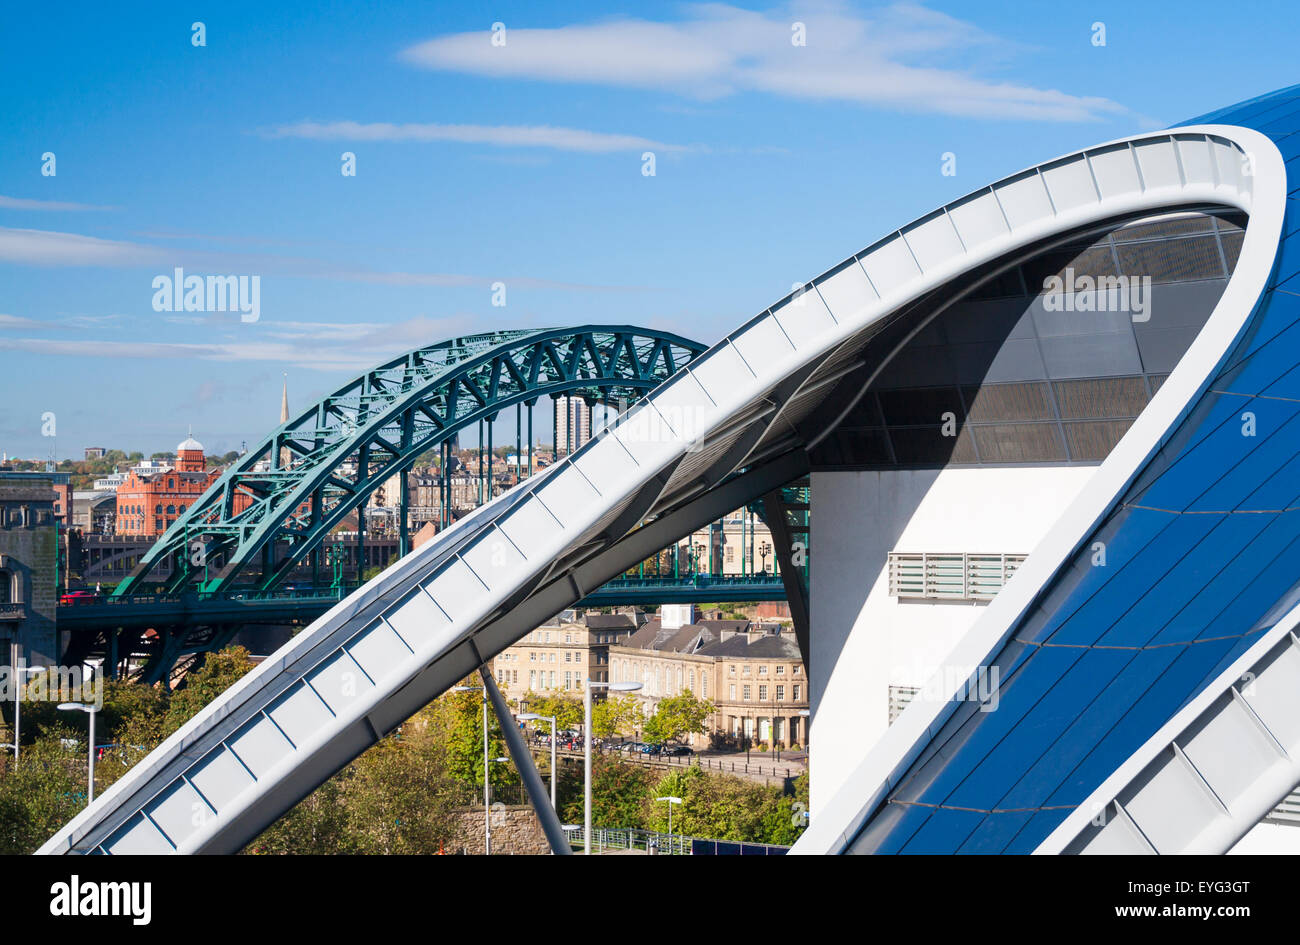 The Sage Gateshead building with Tyne bridge in background. Gateshead, Tyne & Wear, England, UK. Stock Photo